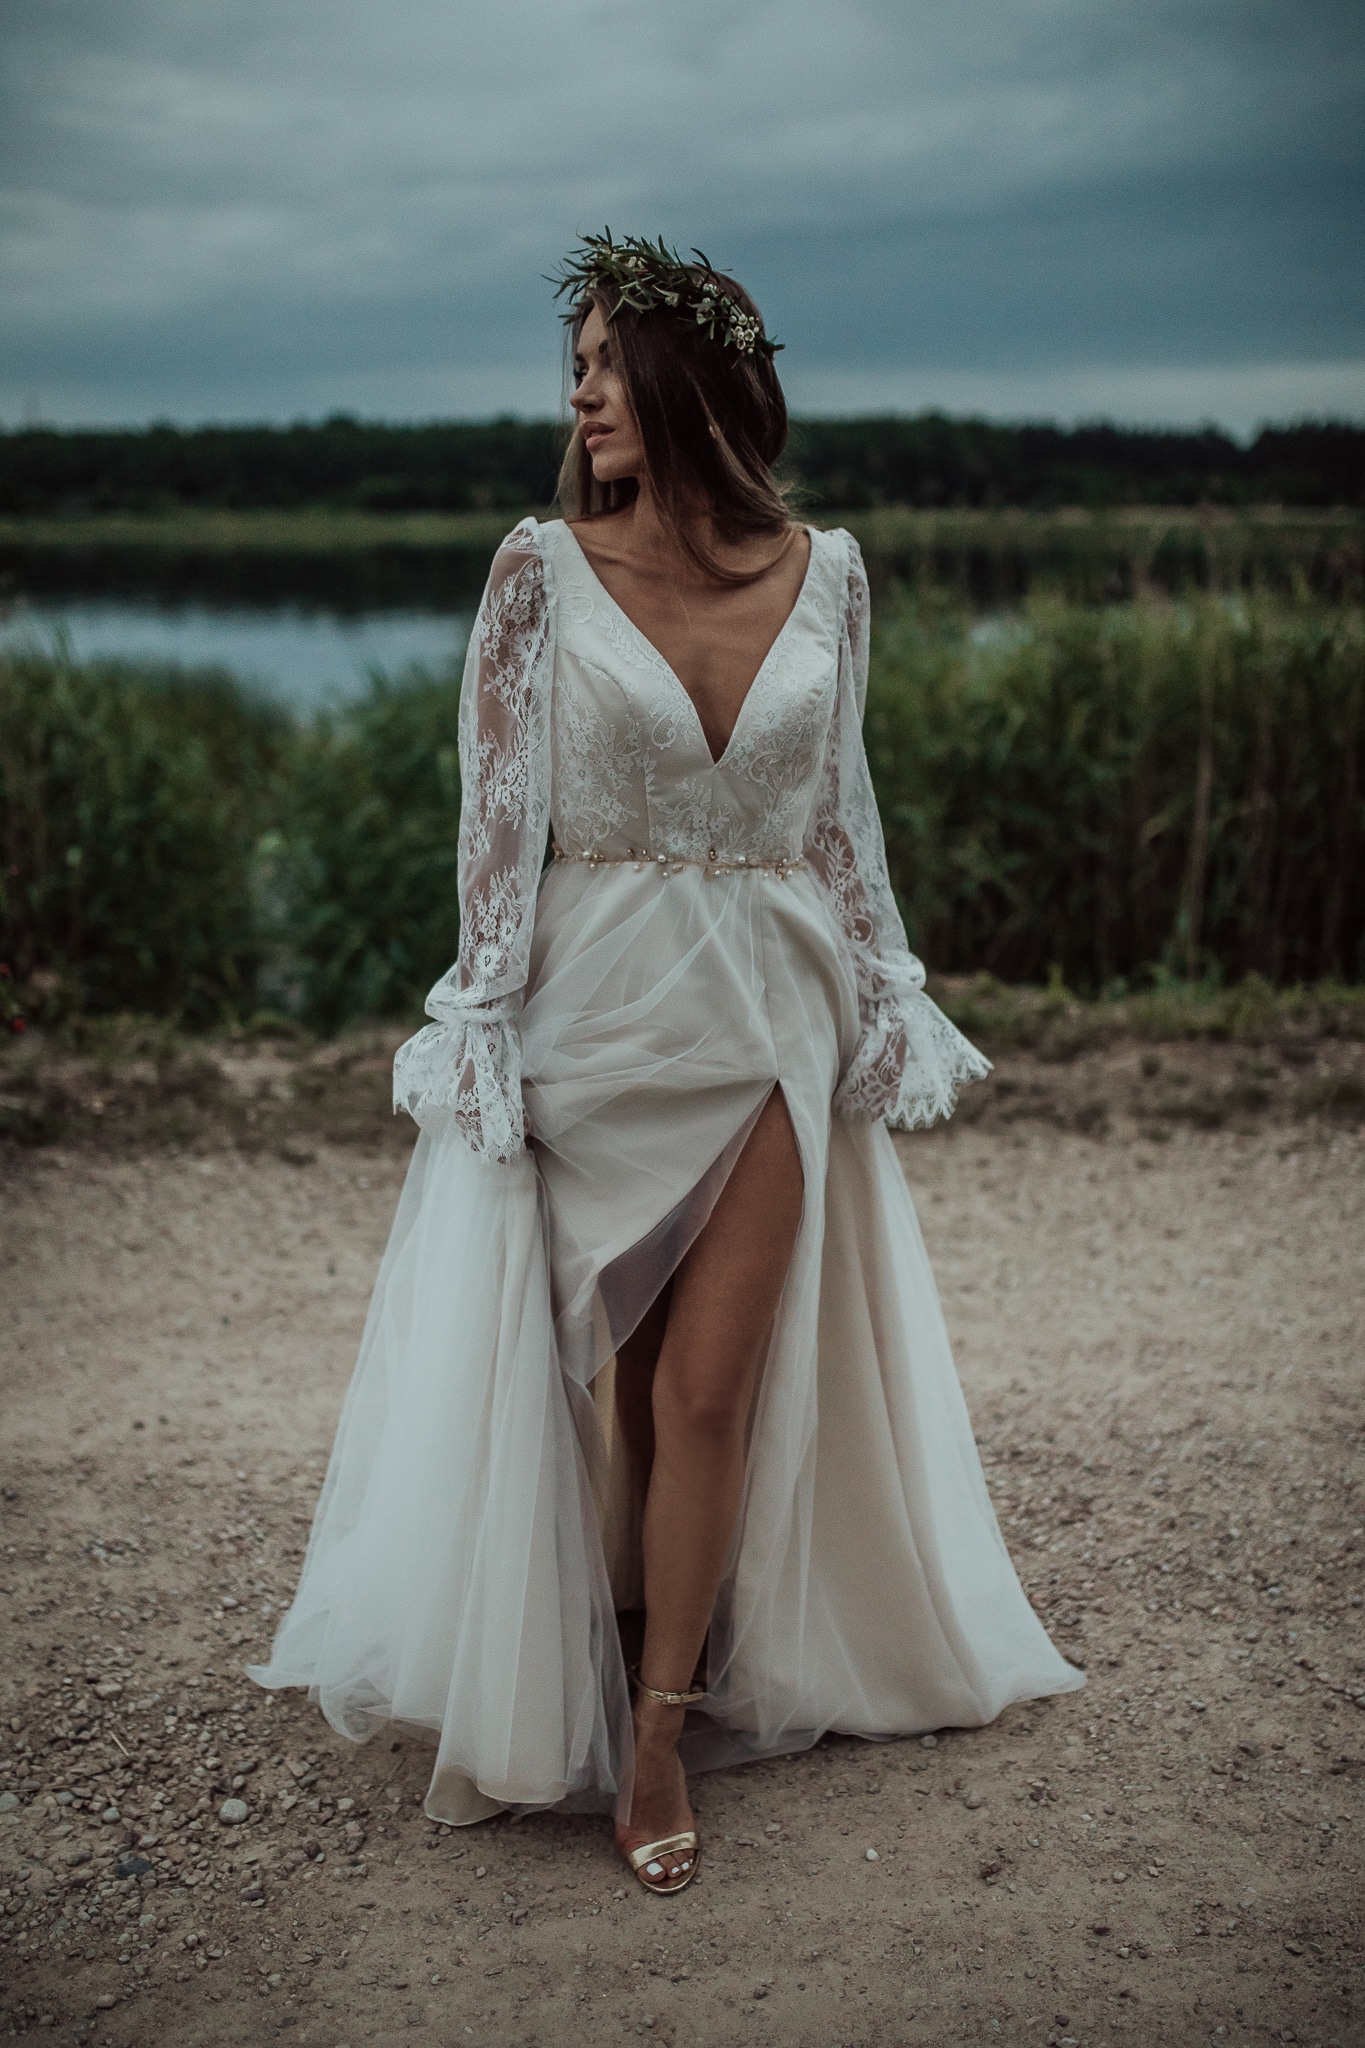 Autumn Spell - Amelii wedding dress